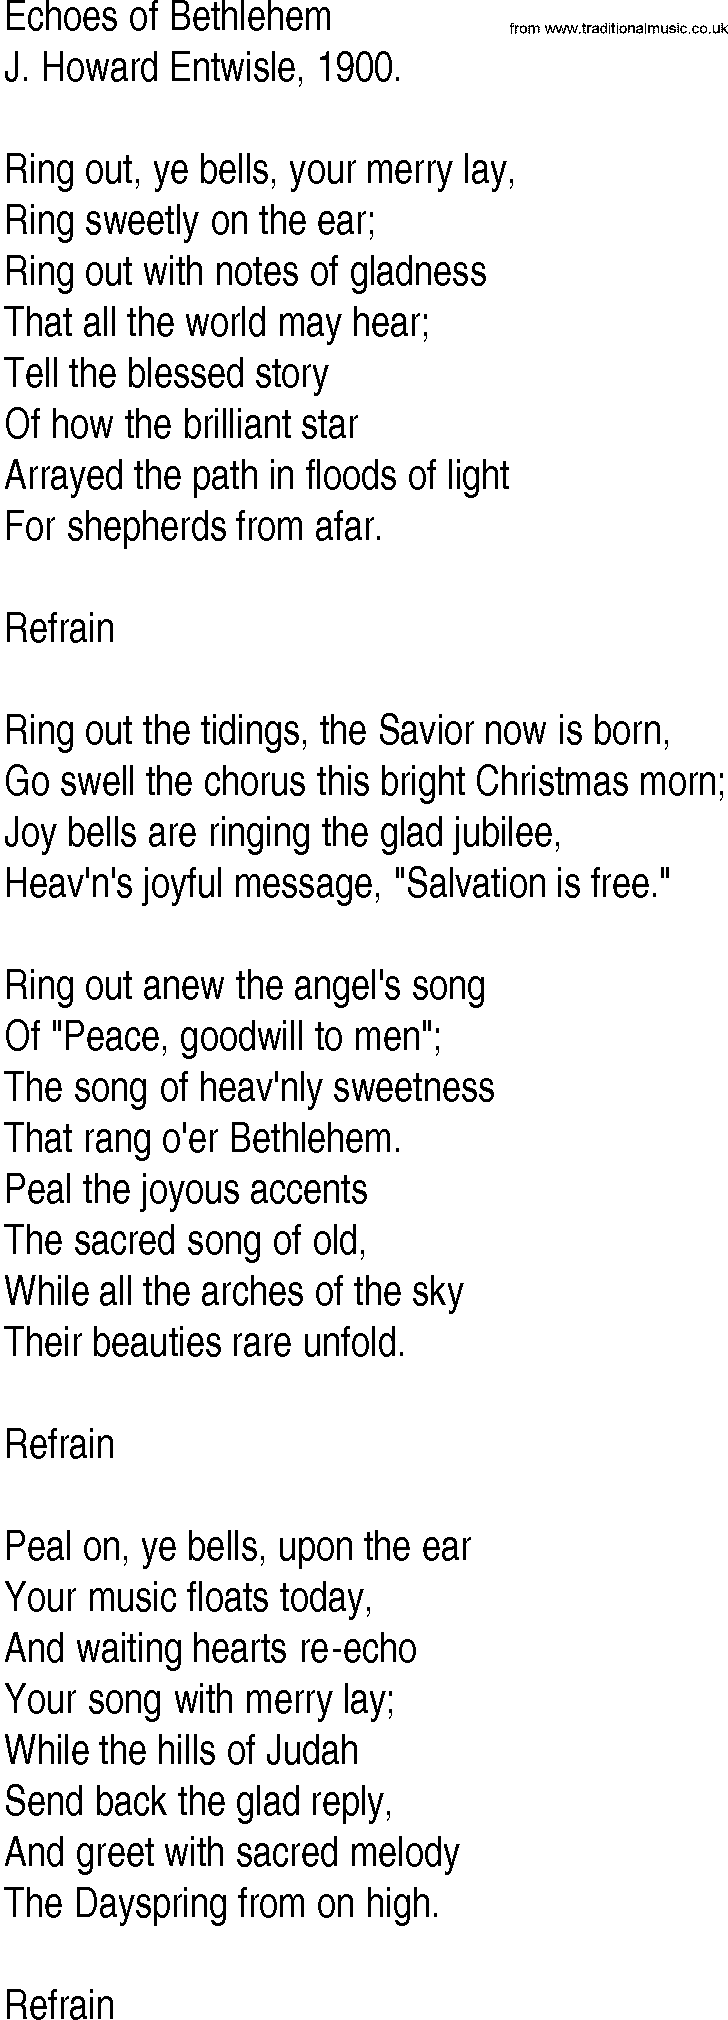 Hymn and Gospel Song: Echoes of Bethlehem by J Howard Entwisle lyrics